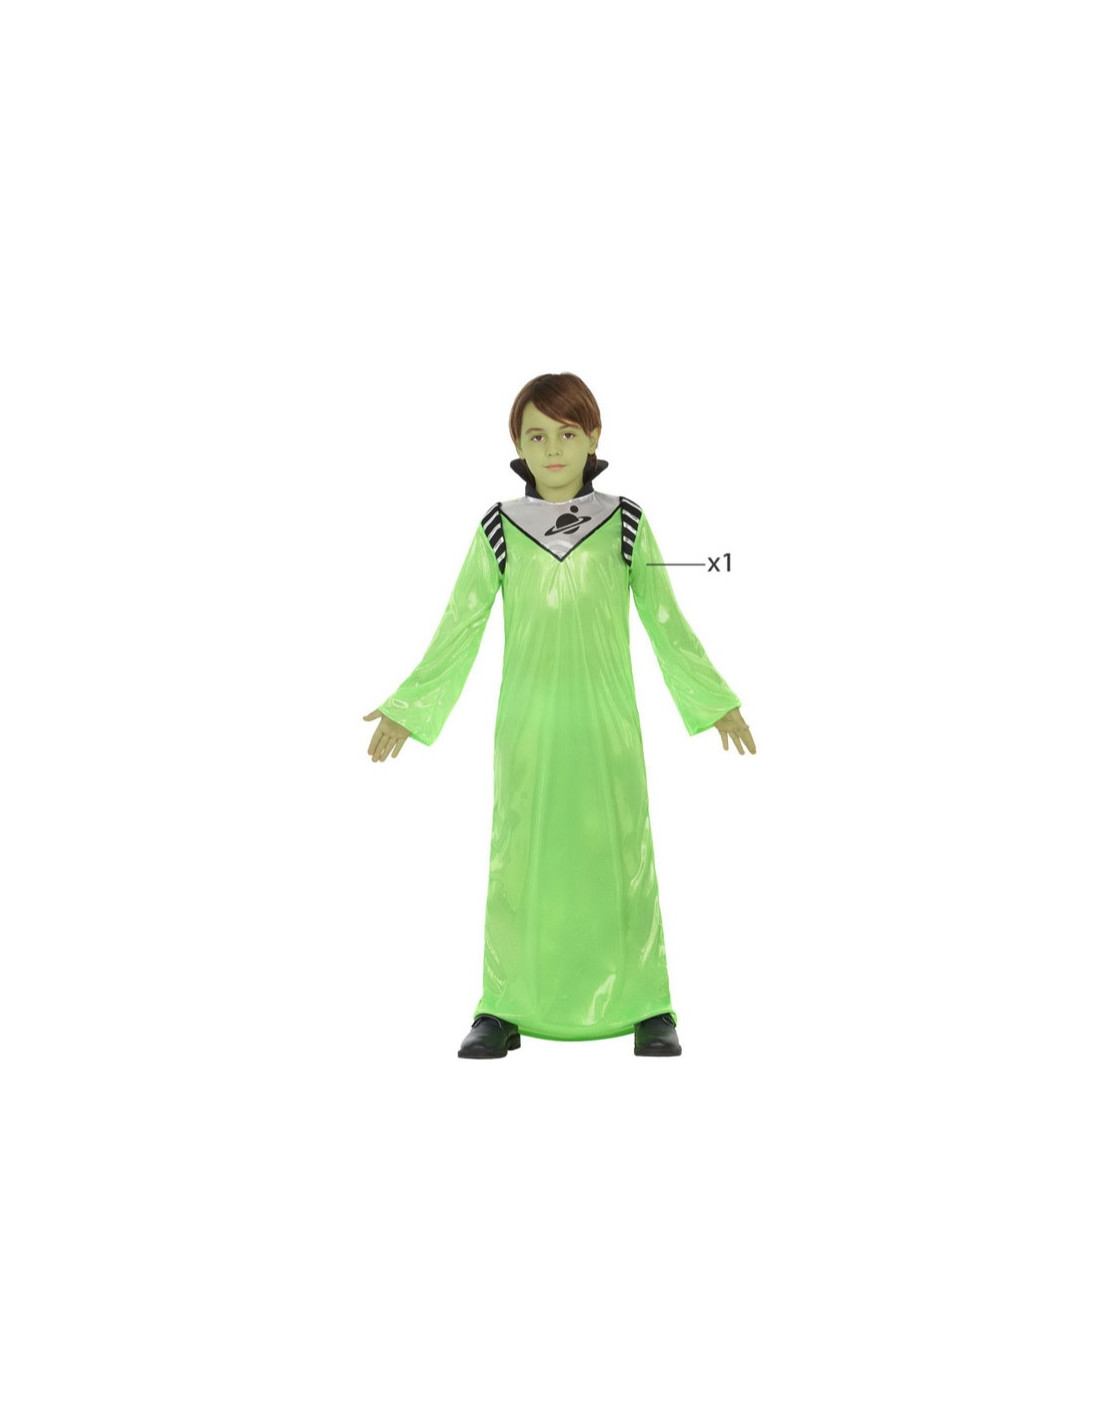 Disfraz Alien verde infantil - Envío 24h